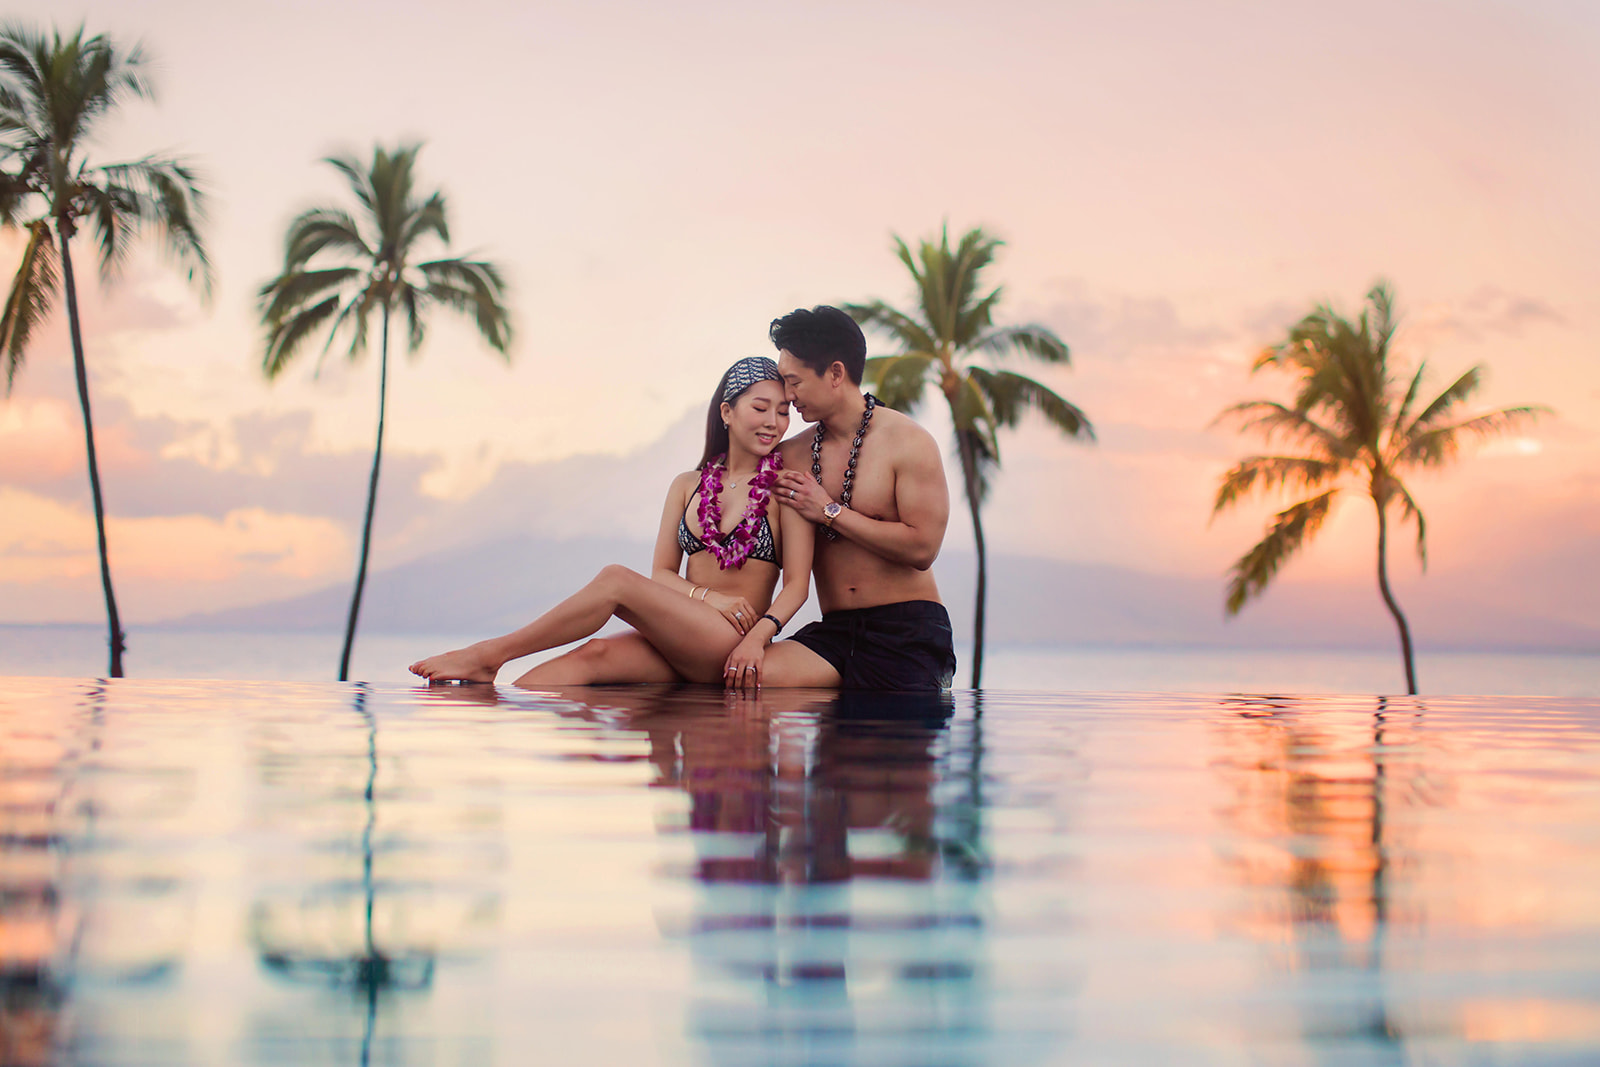 hawaii beach photoshoot idea four seasons resort maui hawaii infinity pool photoshoot with couple wearing lei at sunset